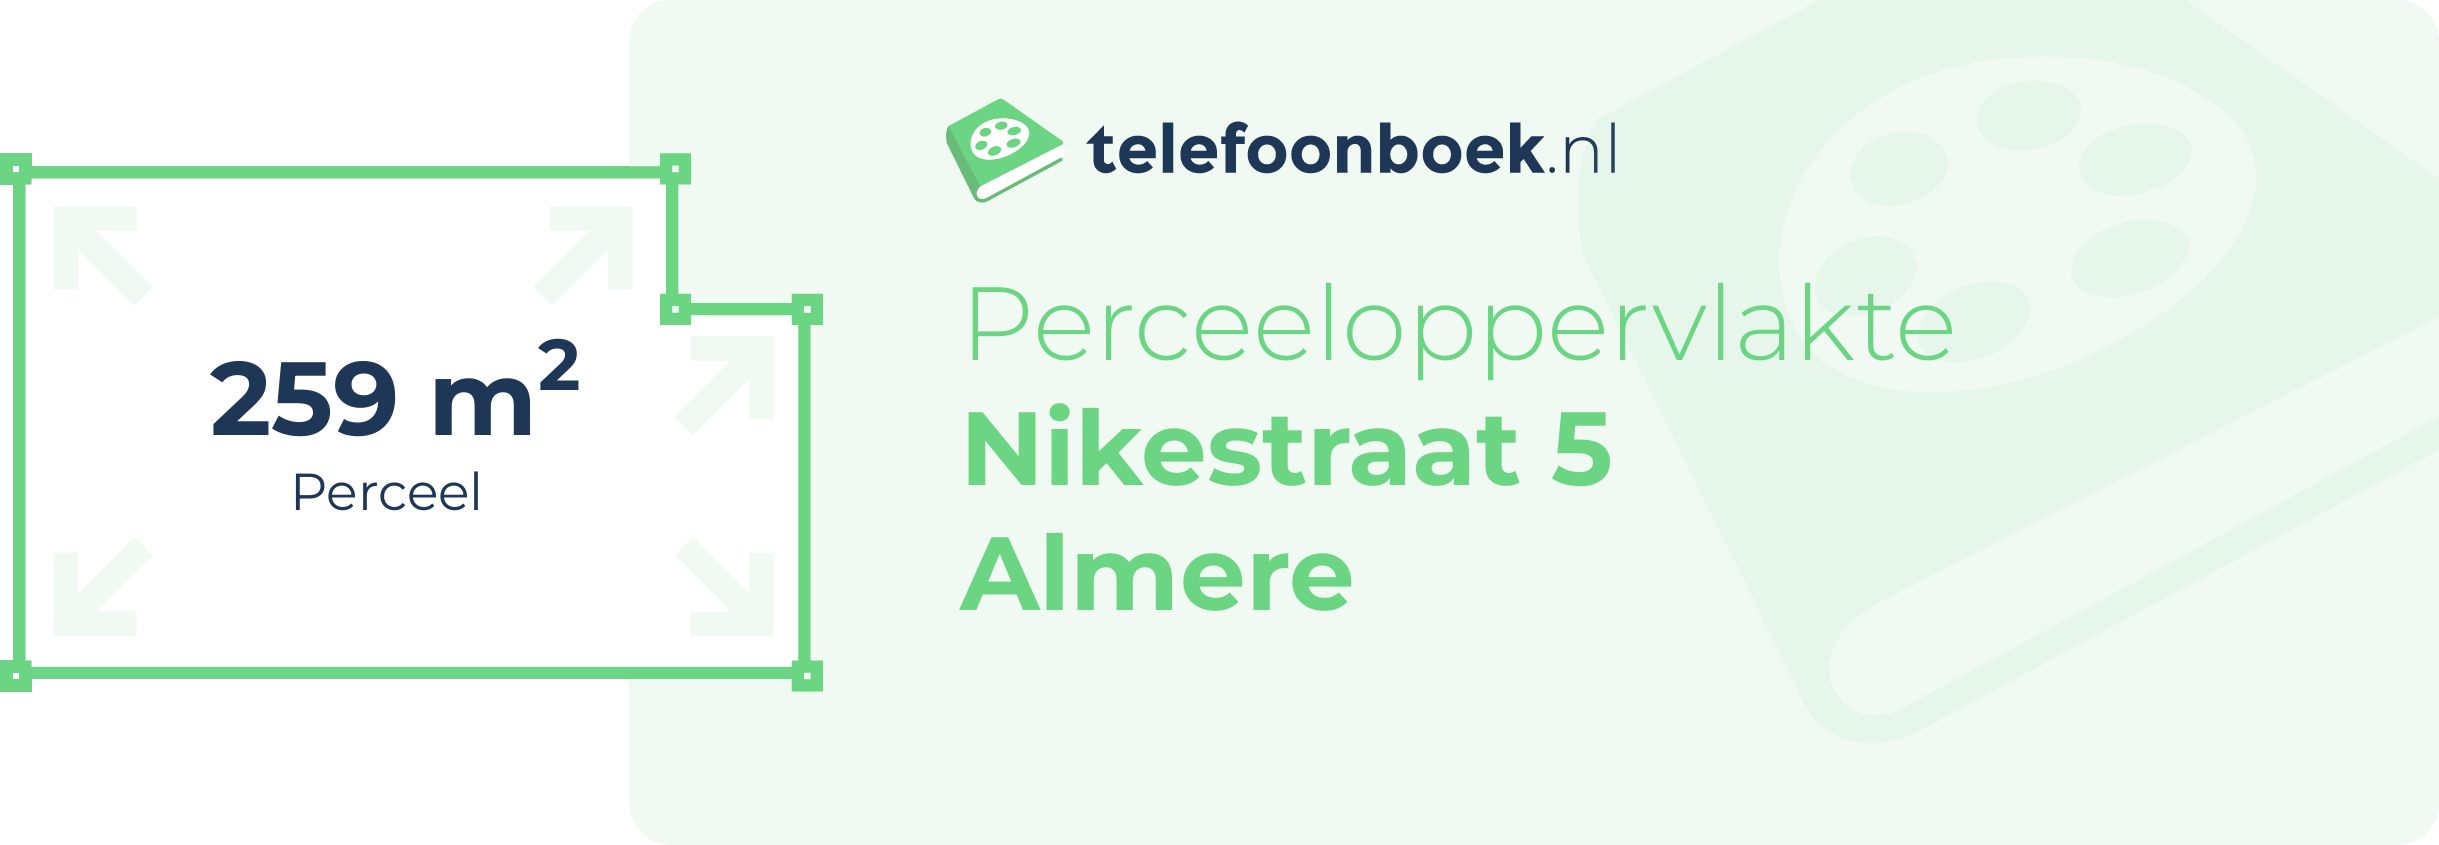 Perceeloppervlakte Nikestraat 5 Almere